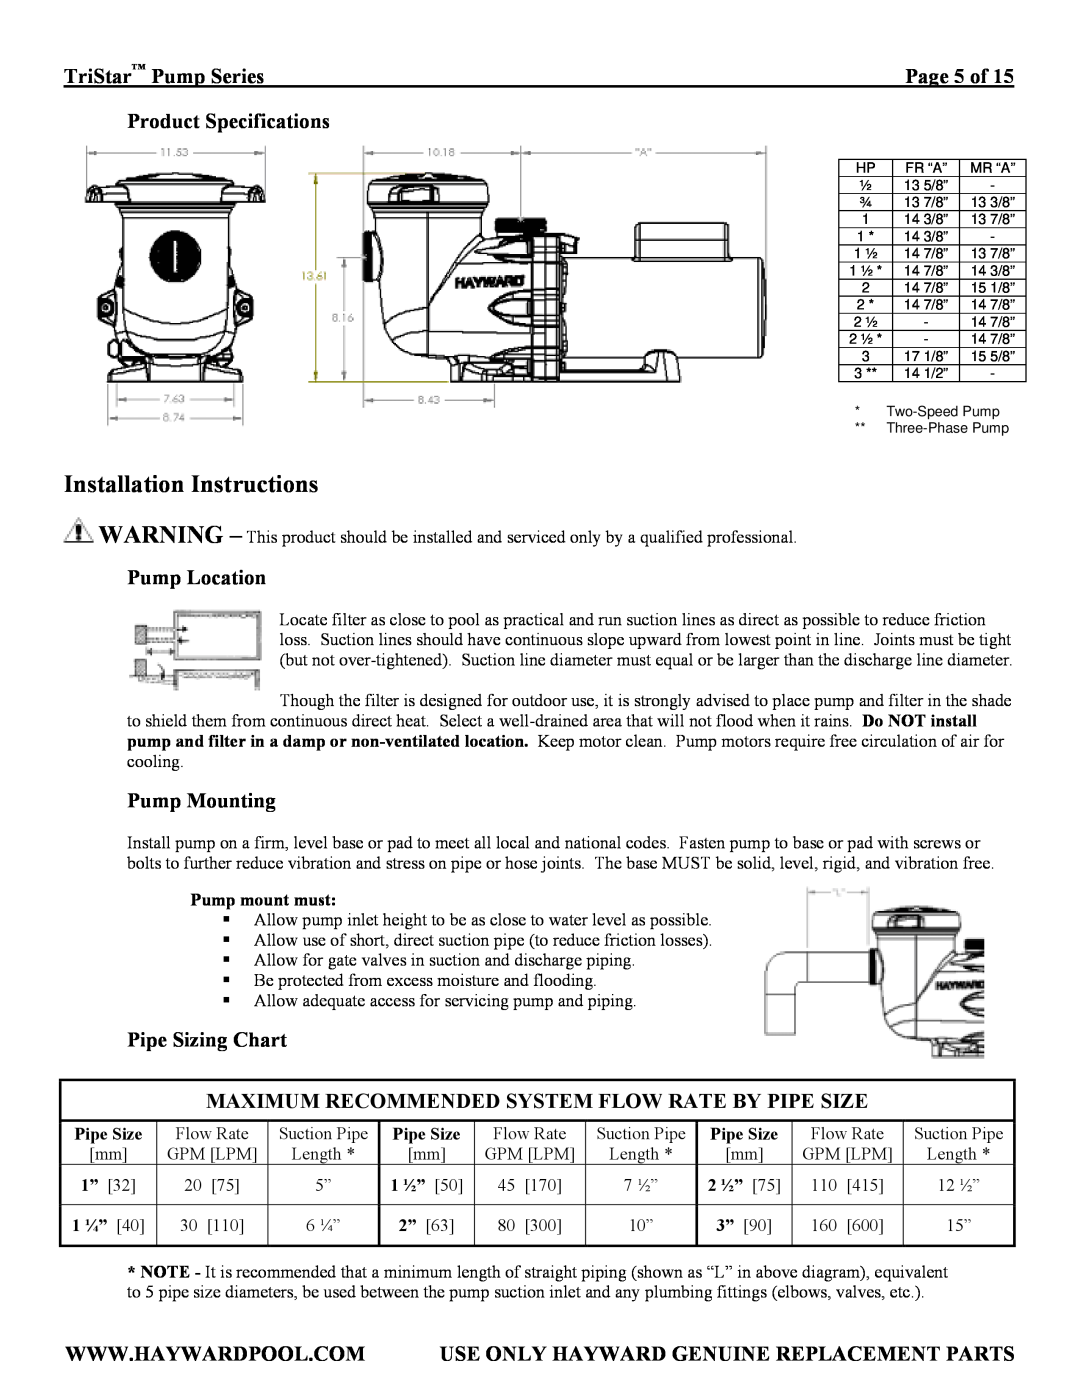 TriStar SP3007X10AZ Installation Instructions, TriStar Pump Series, Product Specifications, Pump Location, Pump Mounting 